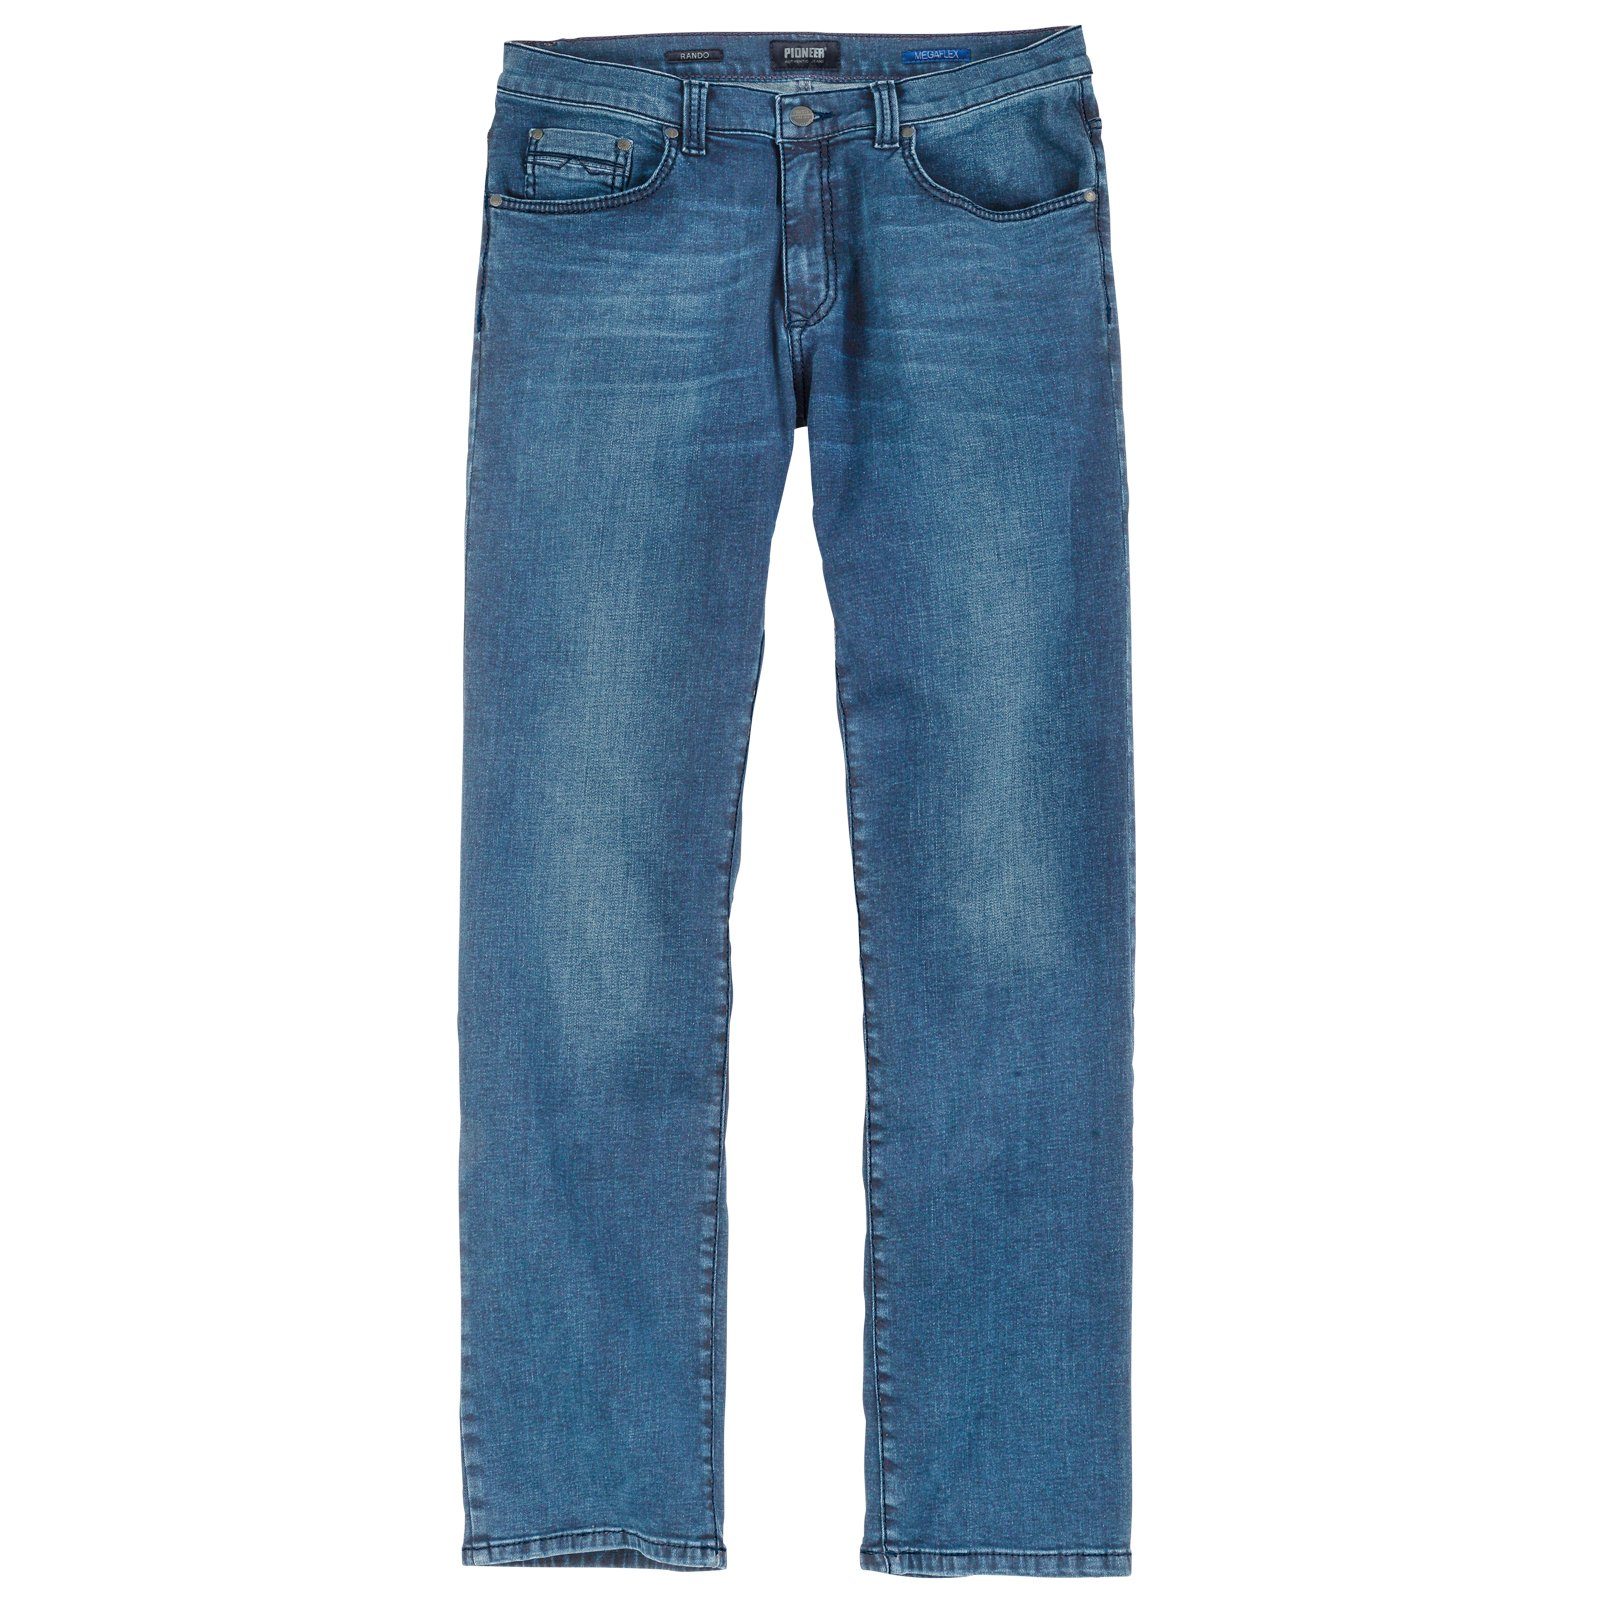 Große Pionier Pioneer blau Stretch-Jeans Herren Stretch-Jeans Rando used Größen